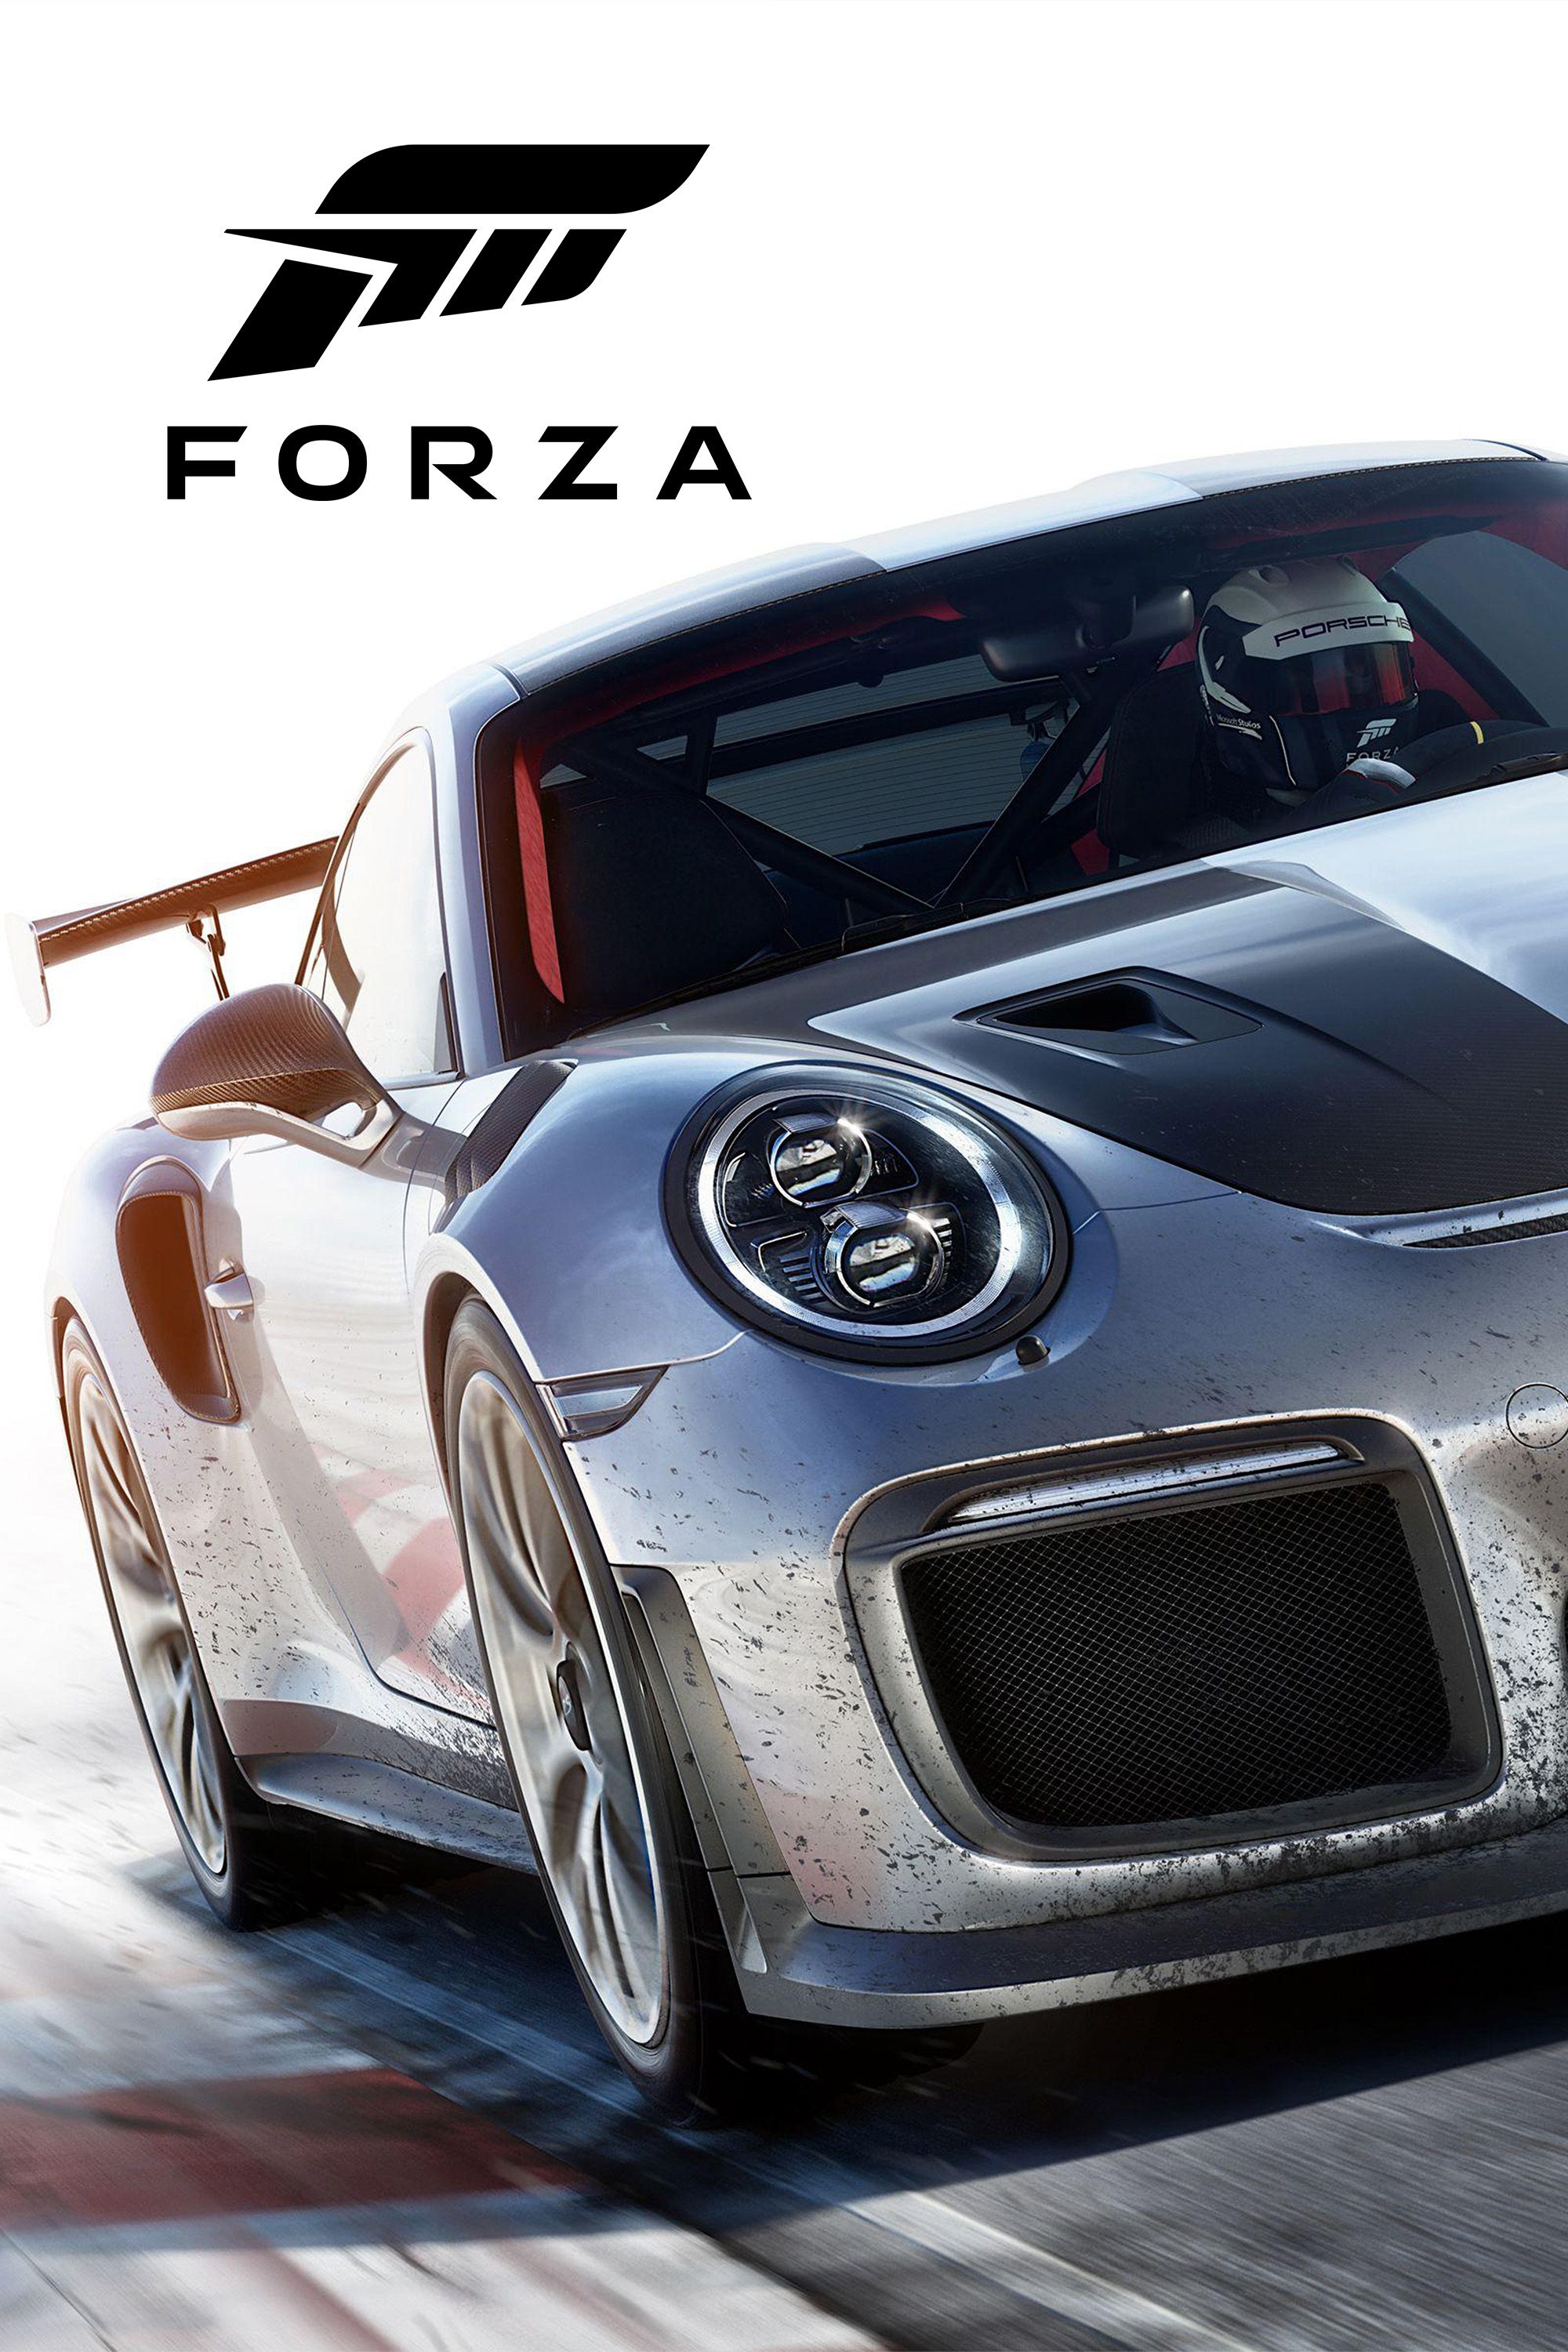 forza-motorsport-game-franchise-series